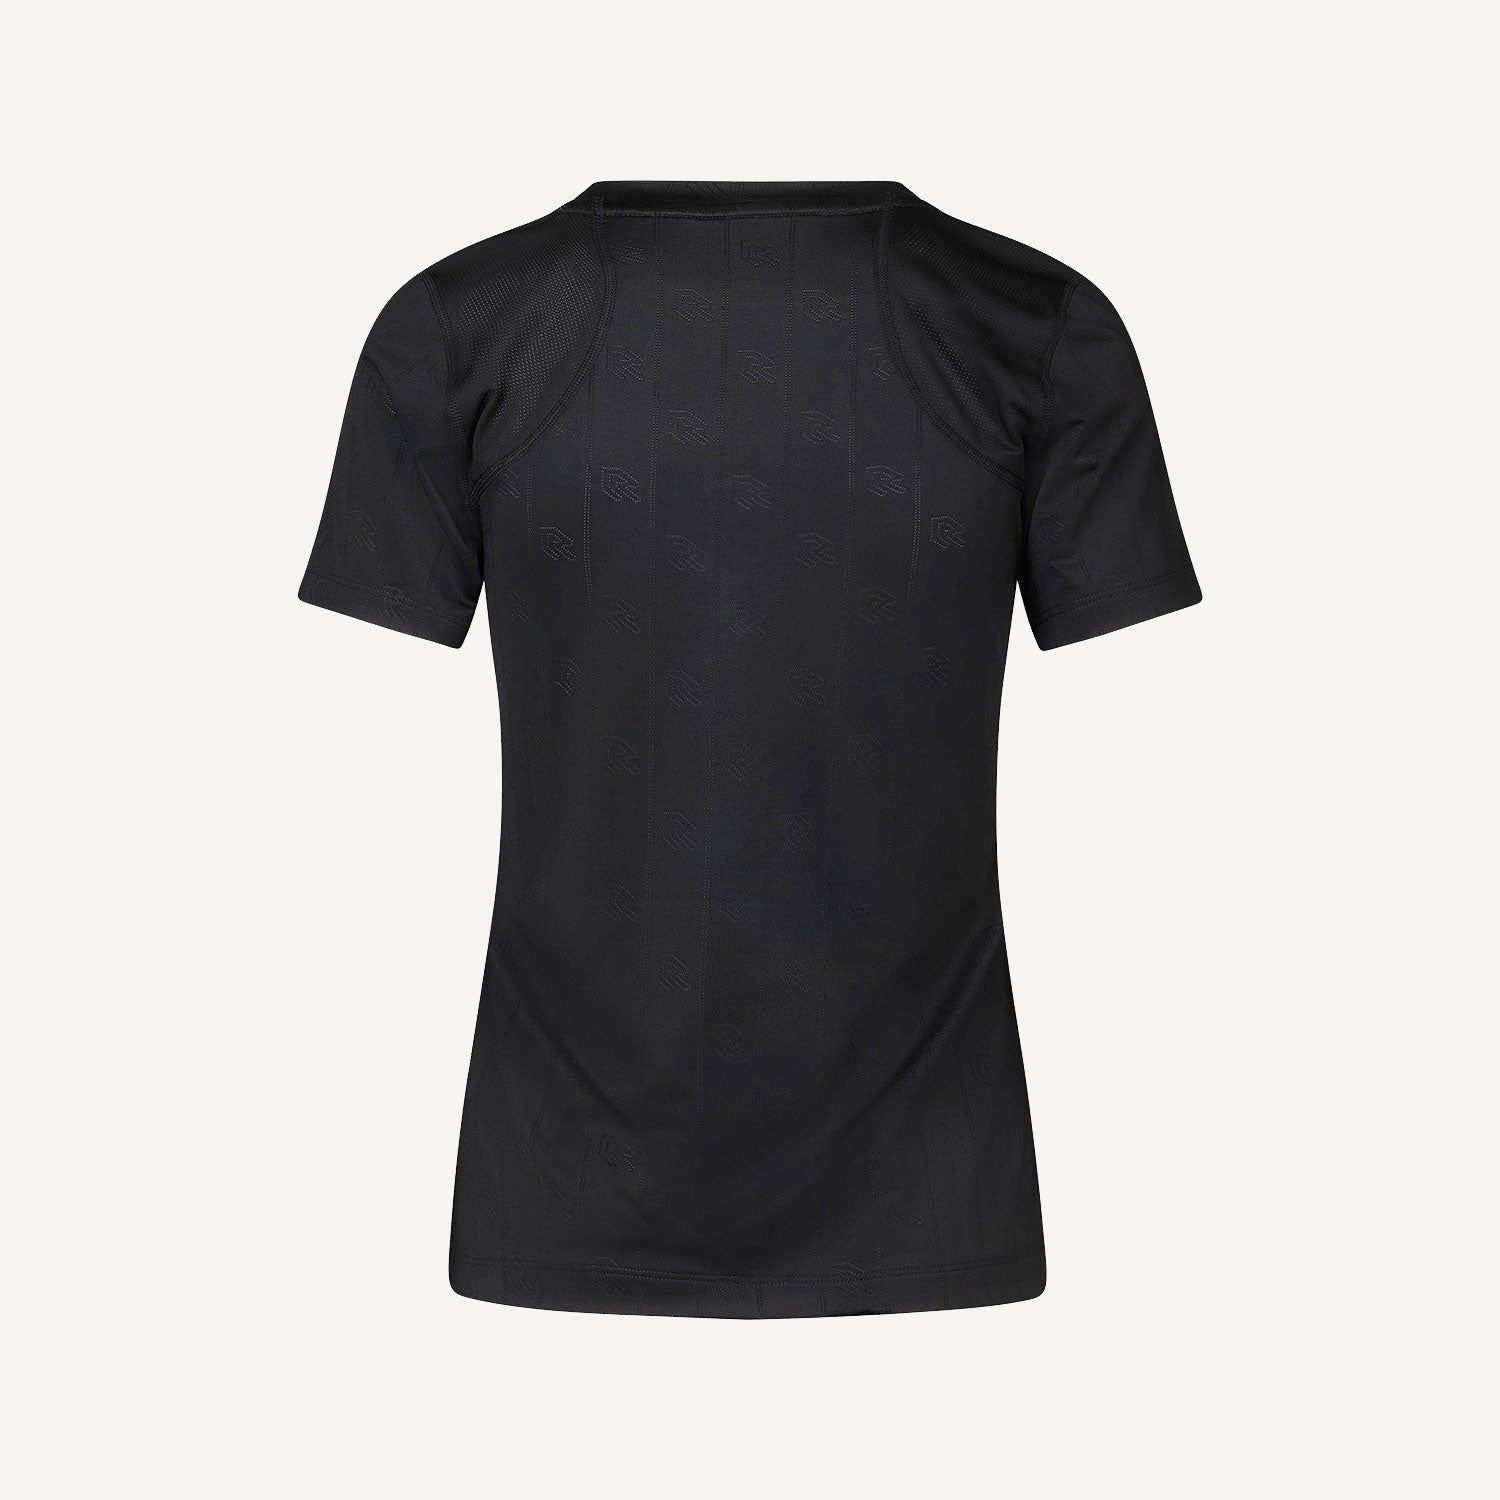 Robey Ace Women's Tennis Shirt - Black (2)